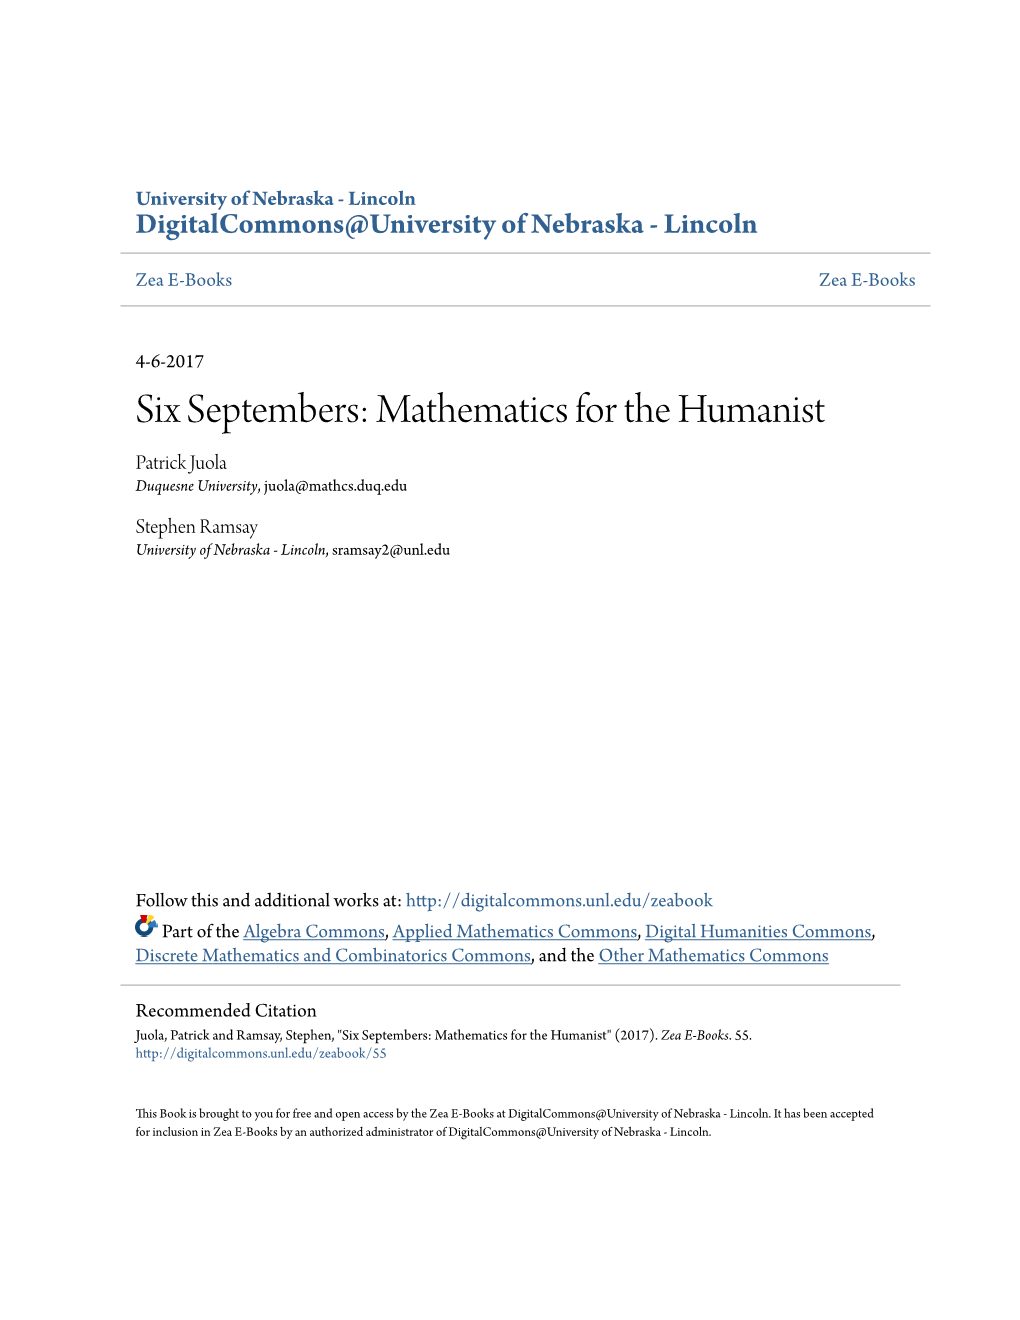 Six Septembers: Mathematics for the Humanist Patrick Juola Duquesne University, Juola@Mathcs.Duq.Edu